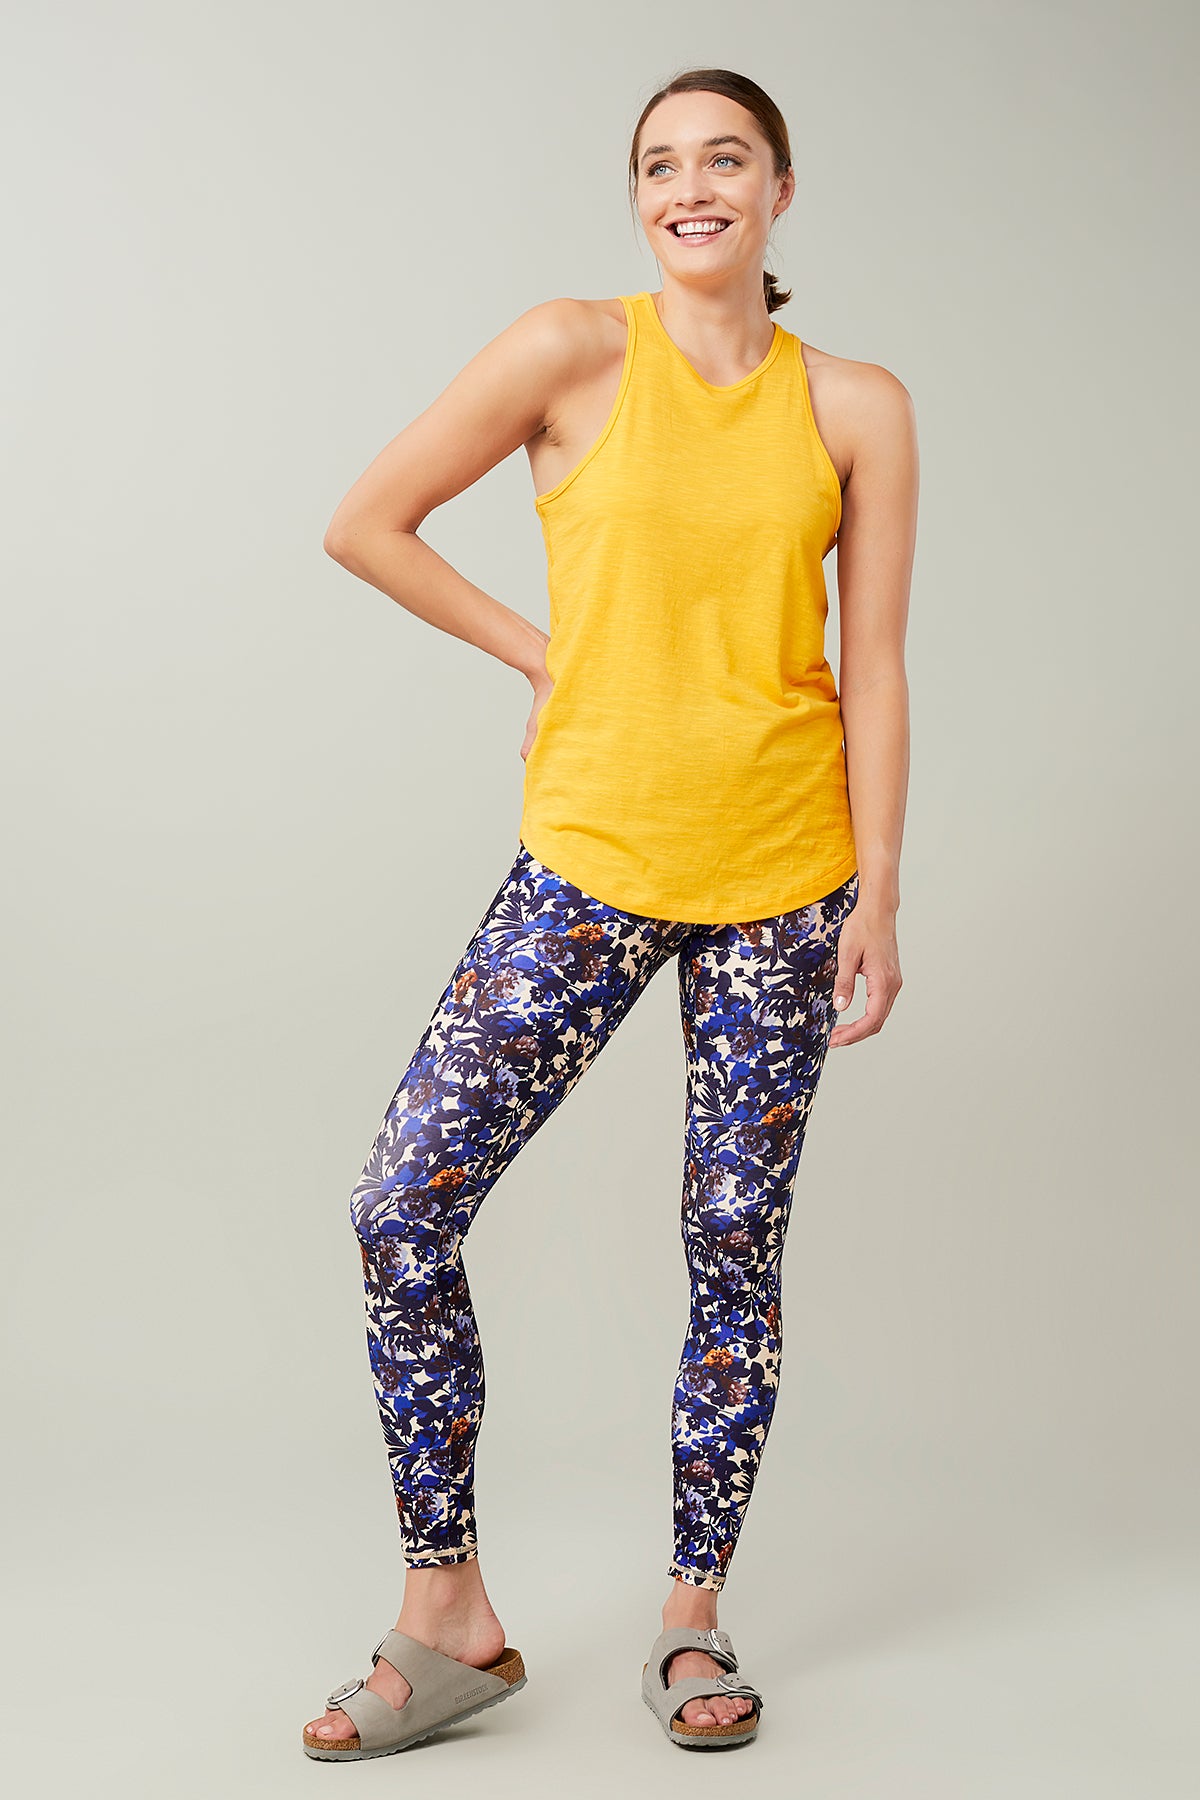 Mandala Yoga Legging Blumen Print Outfit Front - Fancy Legging